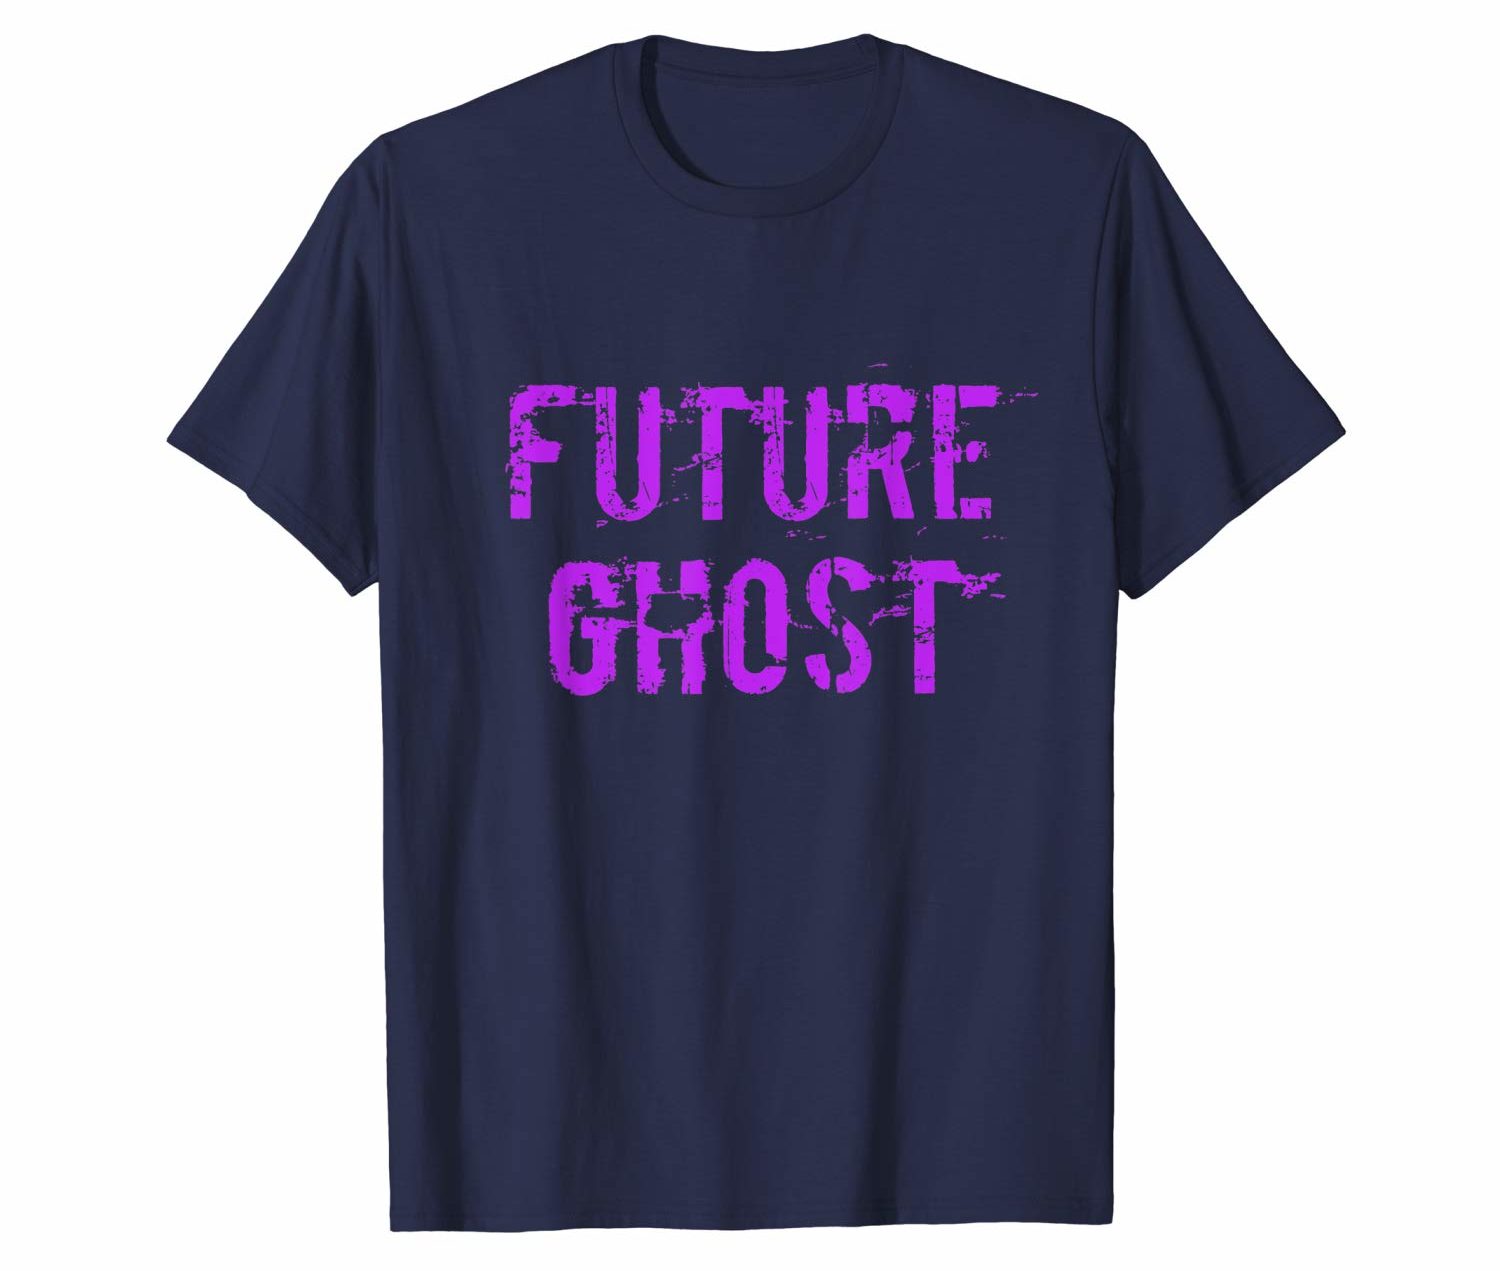 Funny Halloween Shirts 2022: Future Ghost T-Shirt for Men, Women, Kids 2022